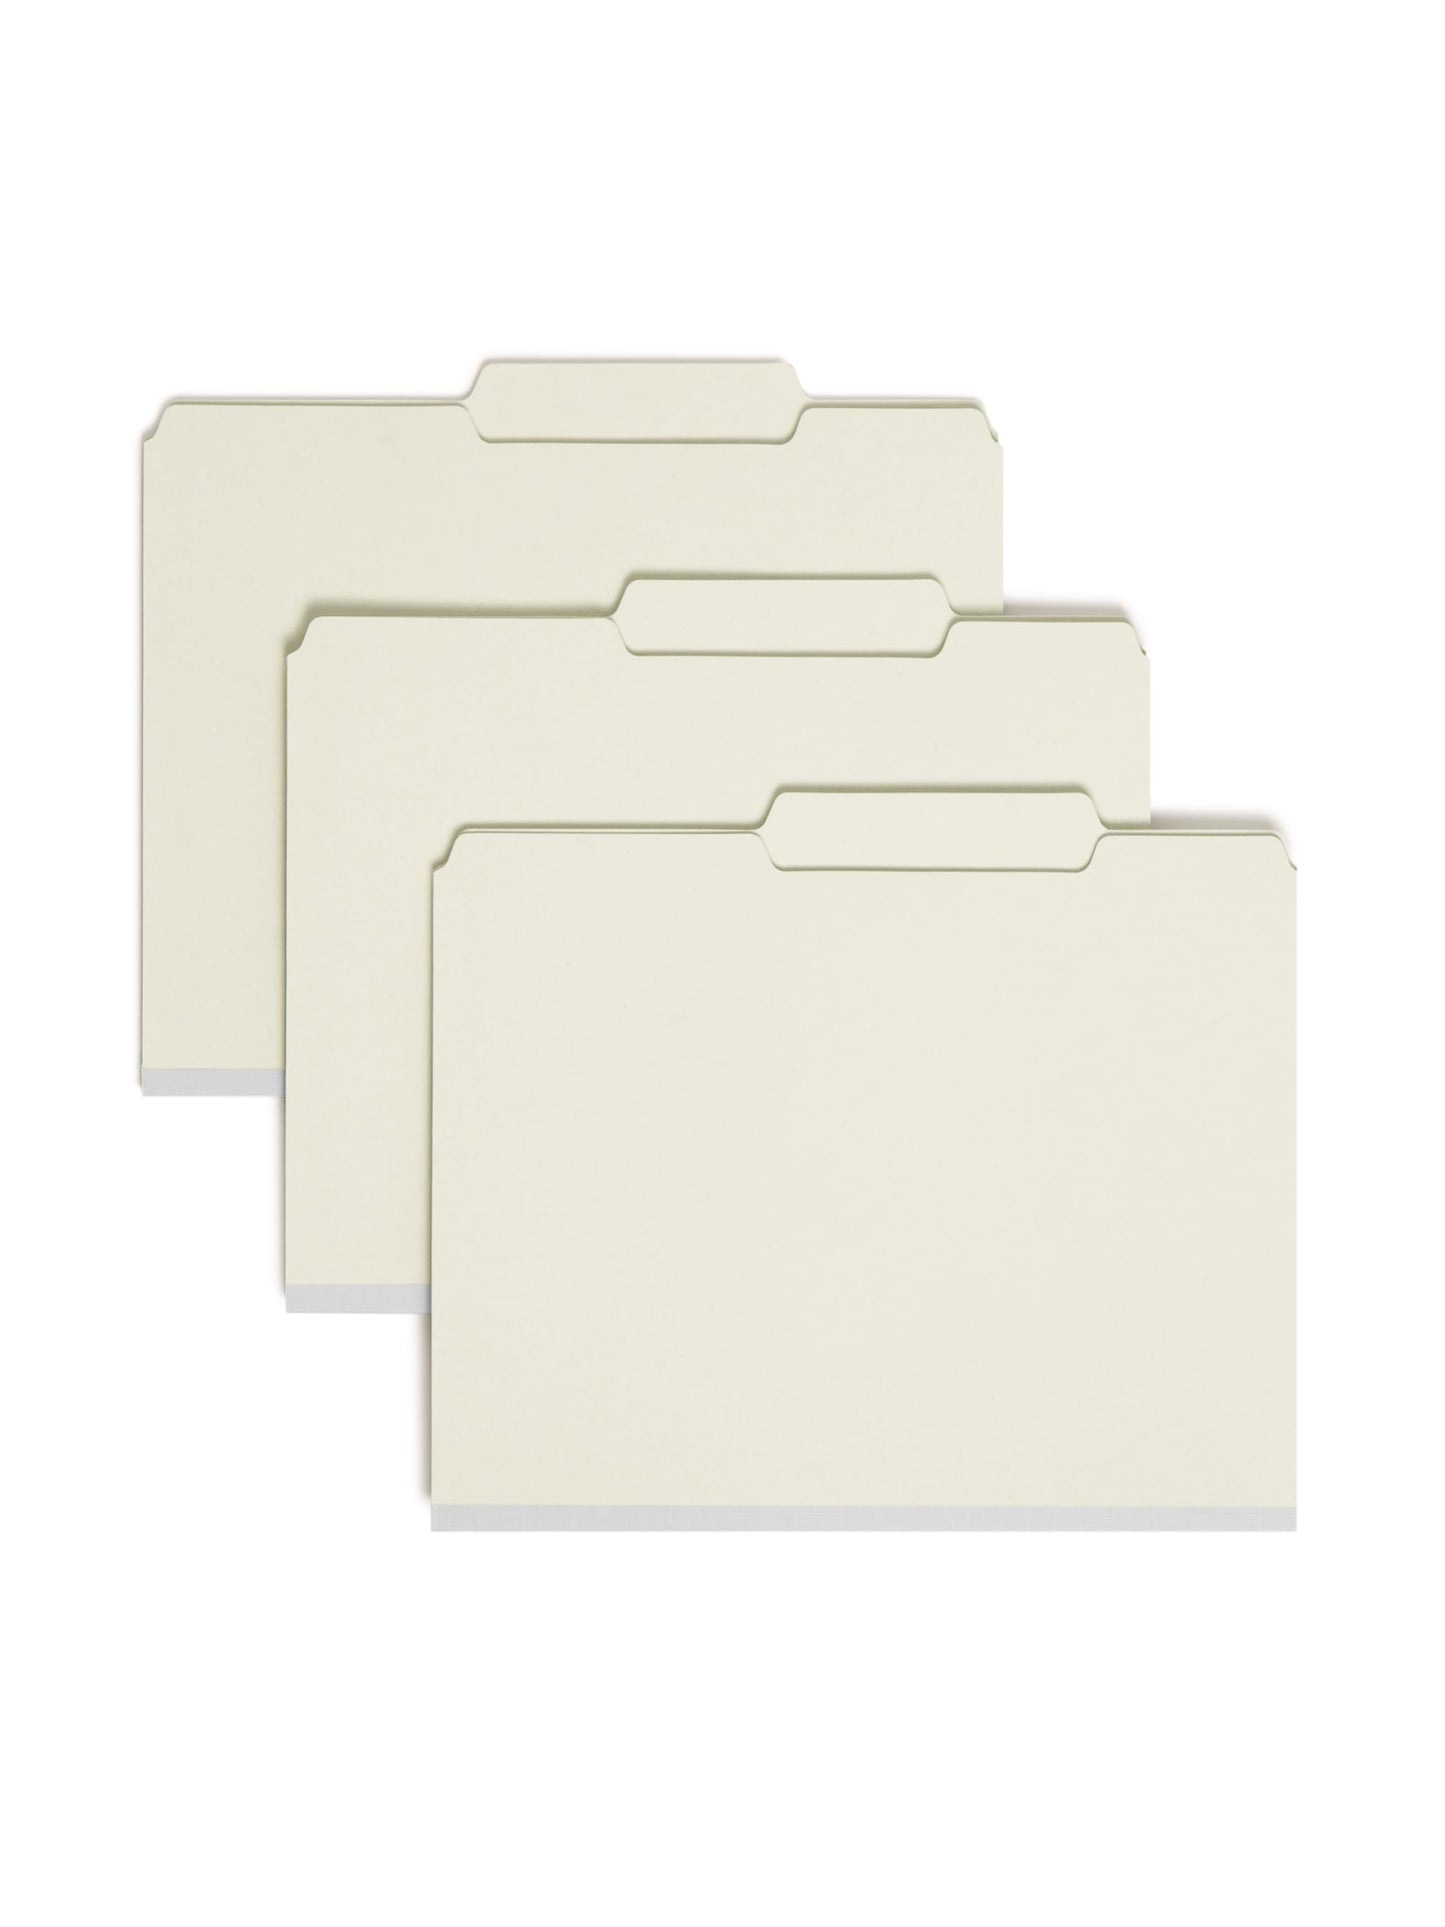 SafeSHIELD® Pressboard Fastener File Folders, 2 inch Expansion, ROC Position 2/5-Cut Tab, Gray/Green Color, Letter Size, Set of 25, 086486149822